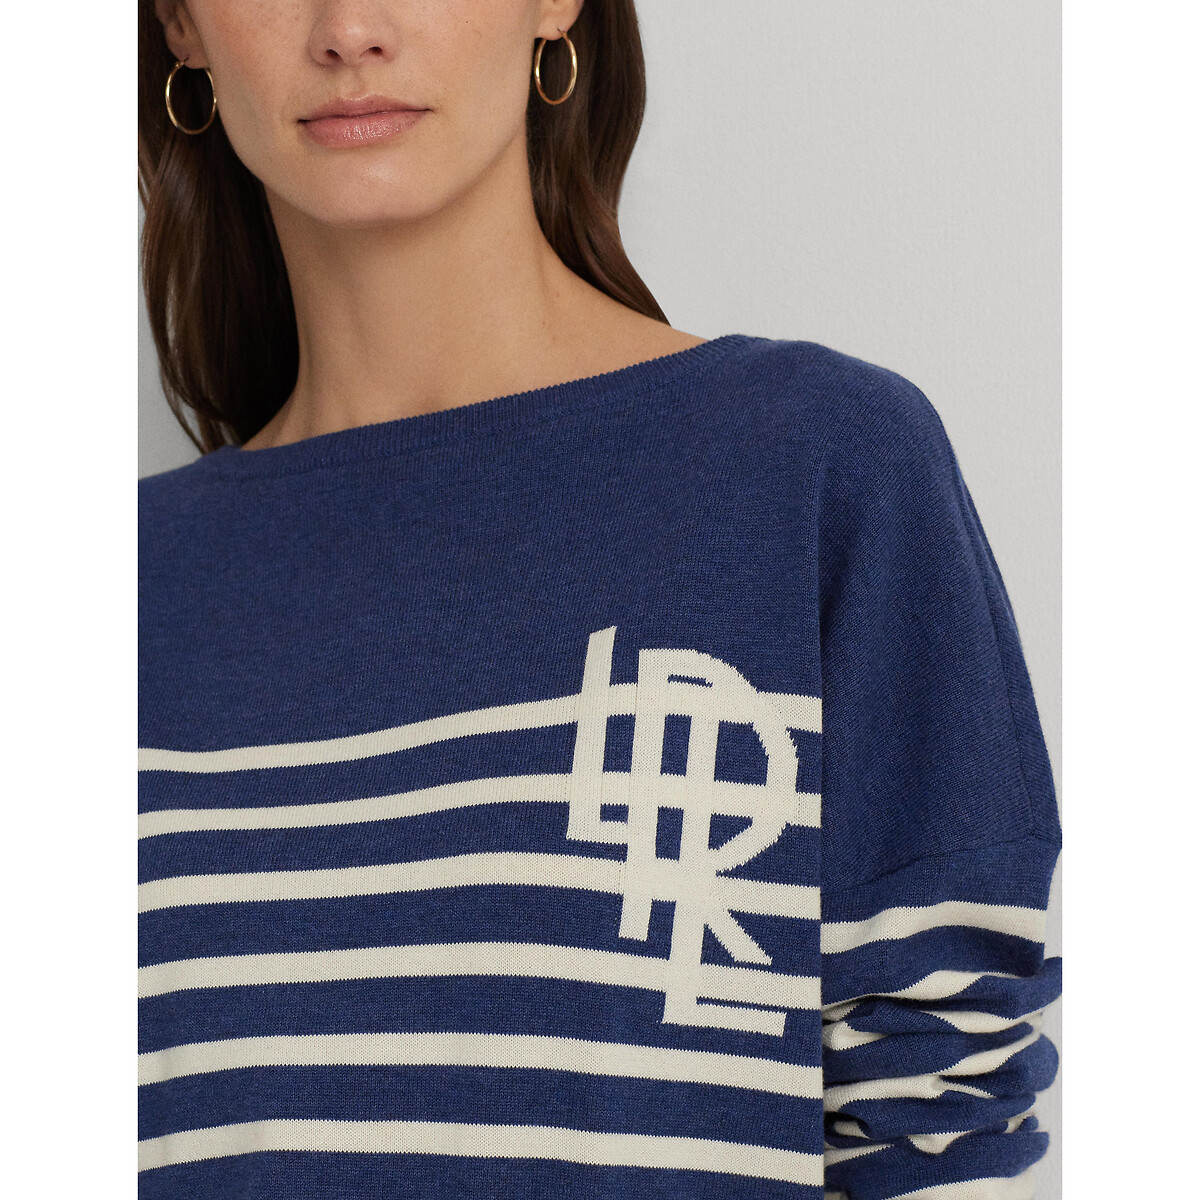 Пуловер в полоску в стиле тельняшки с длинными рукавами HAINVETTE  XS синий LaRedoute, размер XS - фото 4